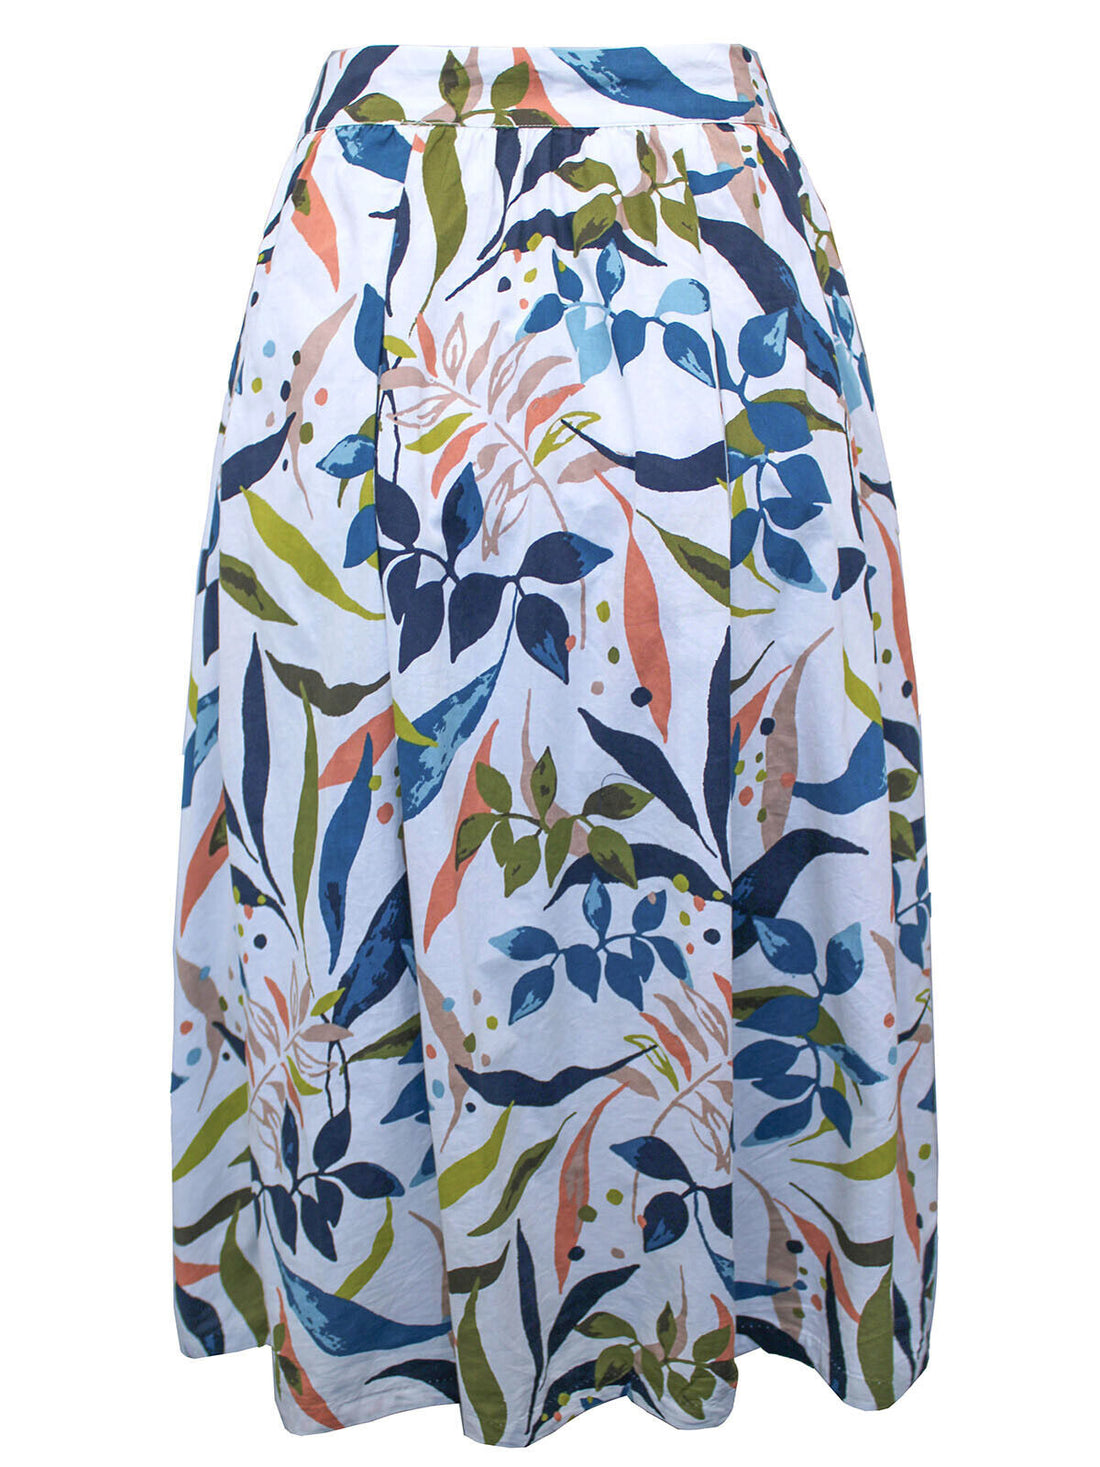 EX Seasalt White Abbey Gardens Mix Perpitch Beach Skirt Sizes 12, 14, 16 RRP £60